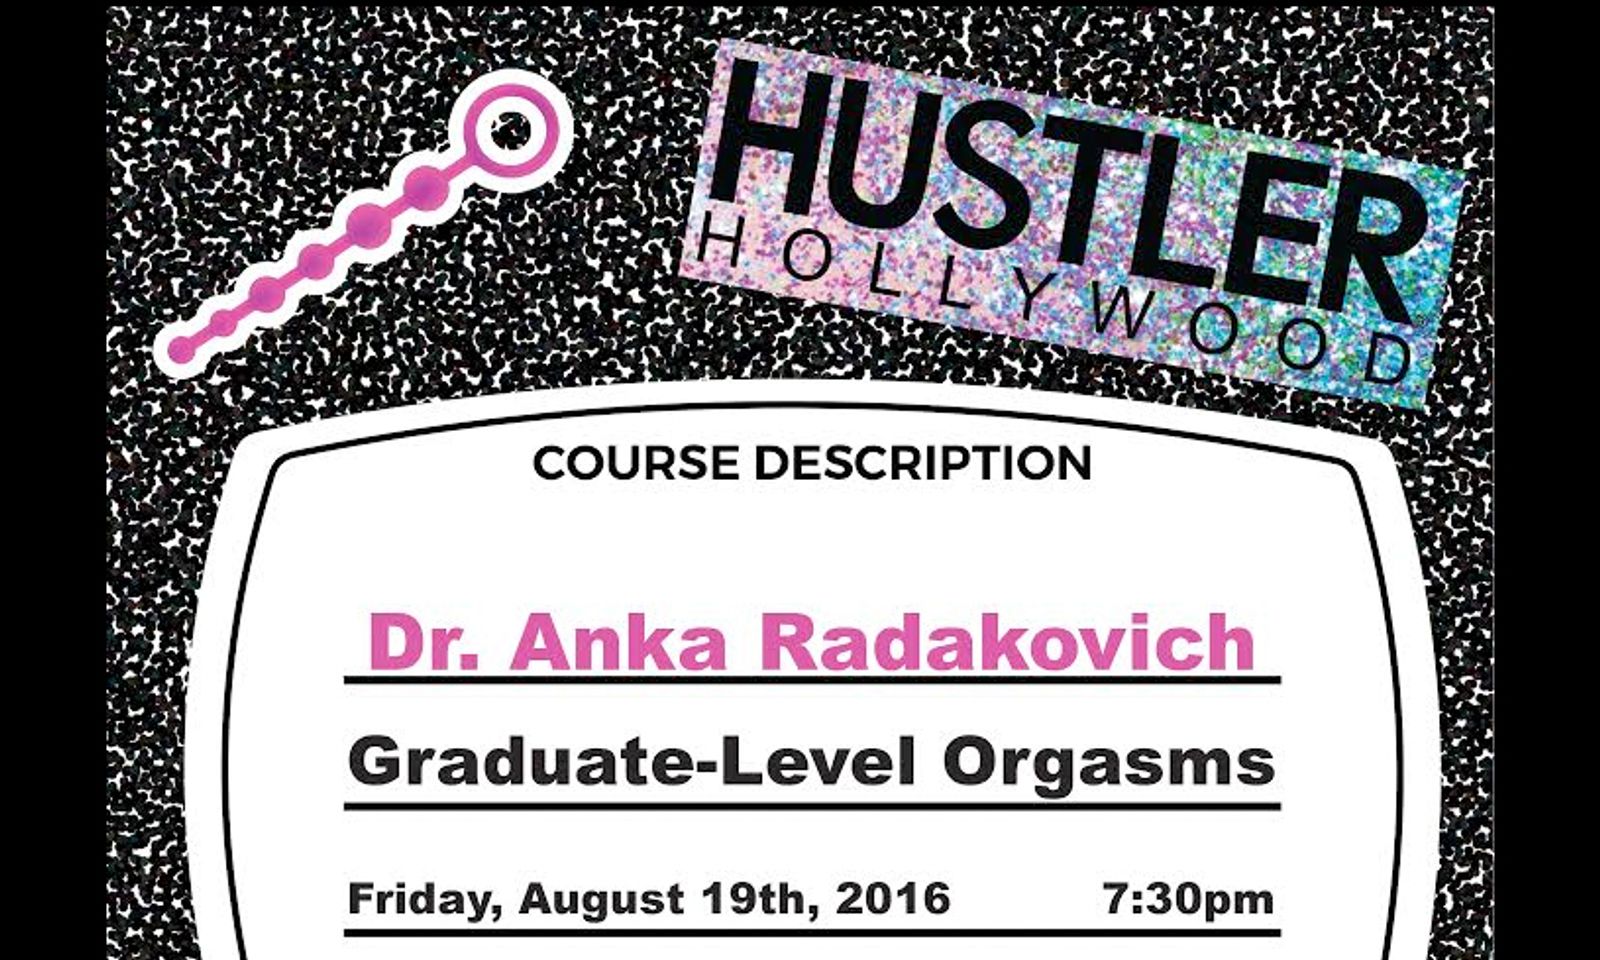 Anka Radakovich Teachs 'Graduate-Level Orgasms'